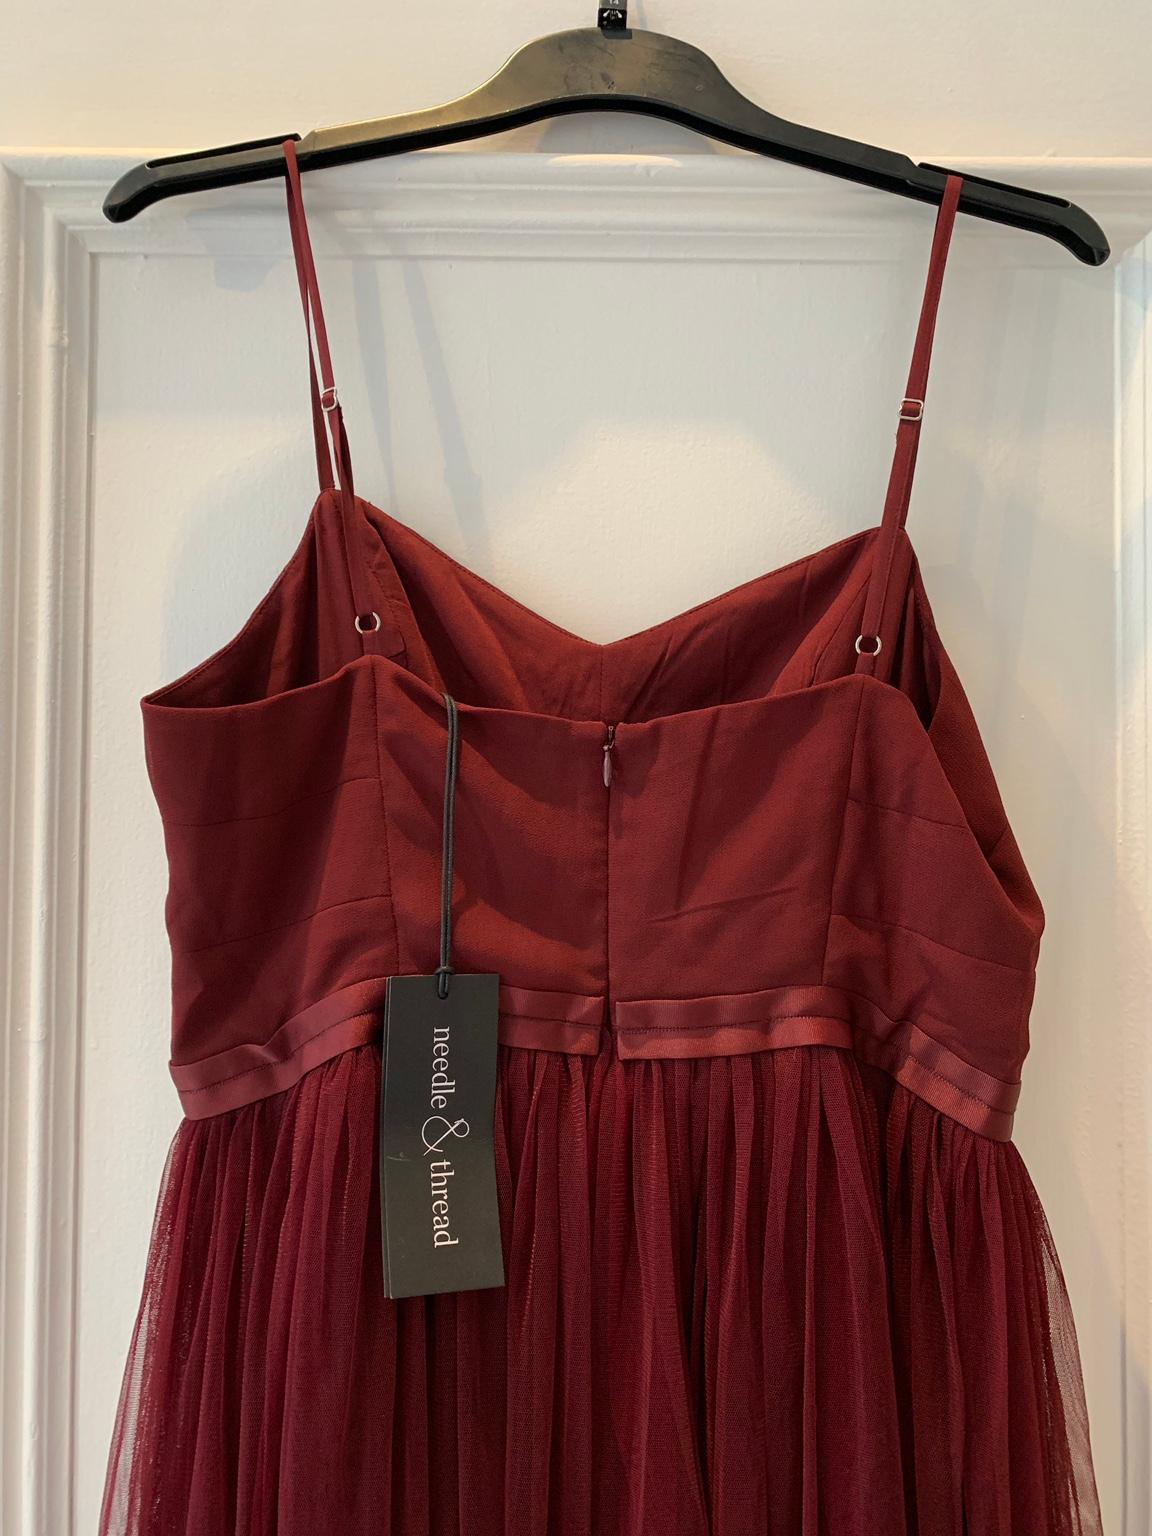 needle and thread burgundy dress